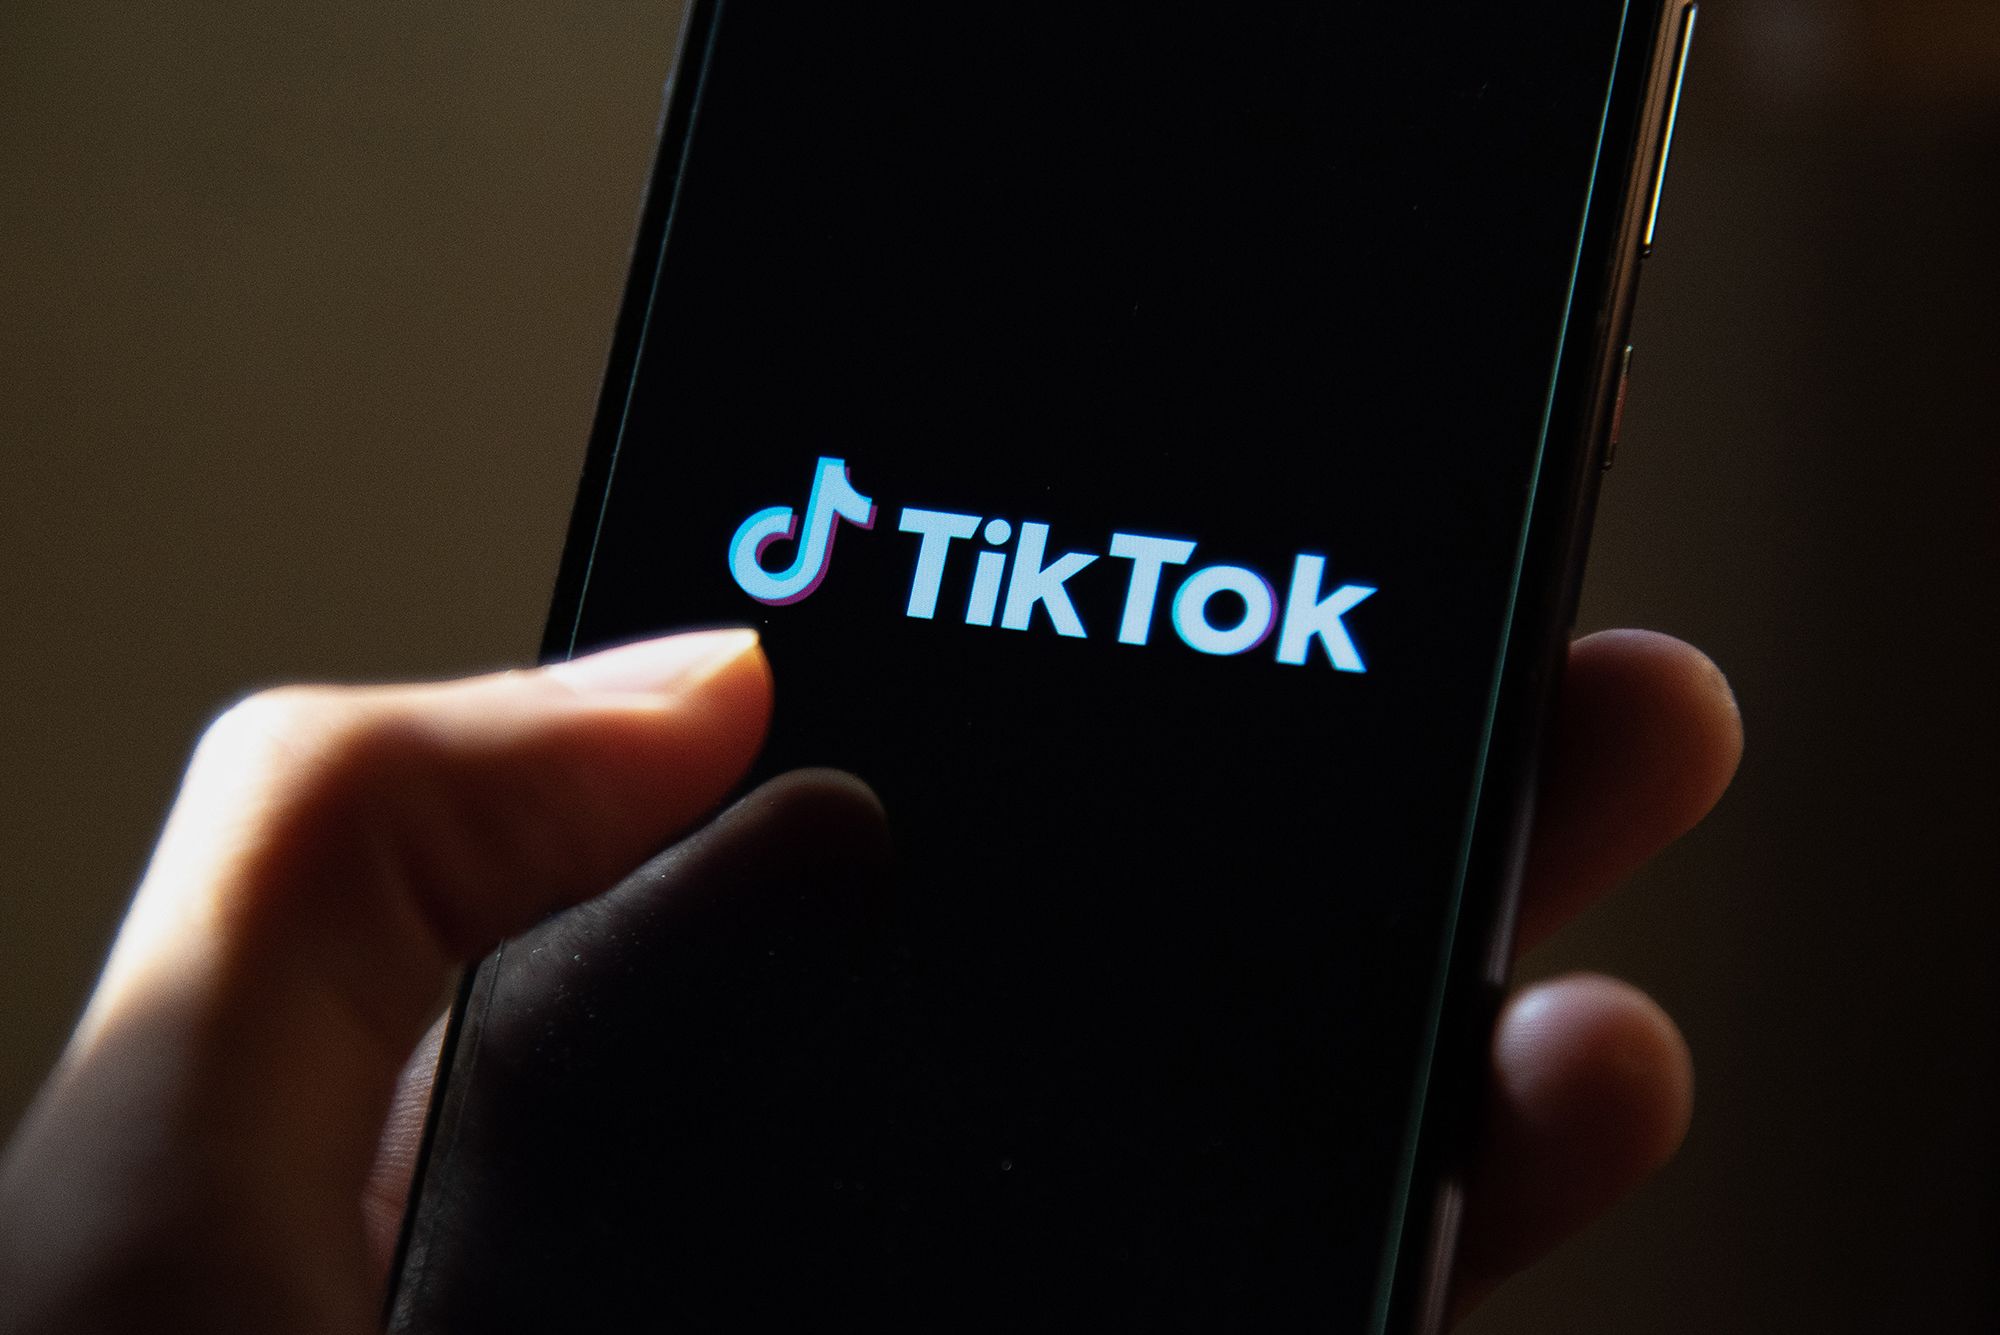 TikTok Works: How Entertainment on TikTok Improves Brand